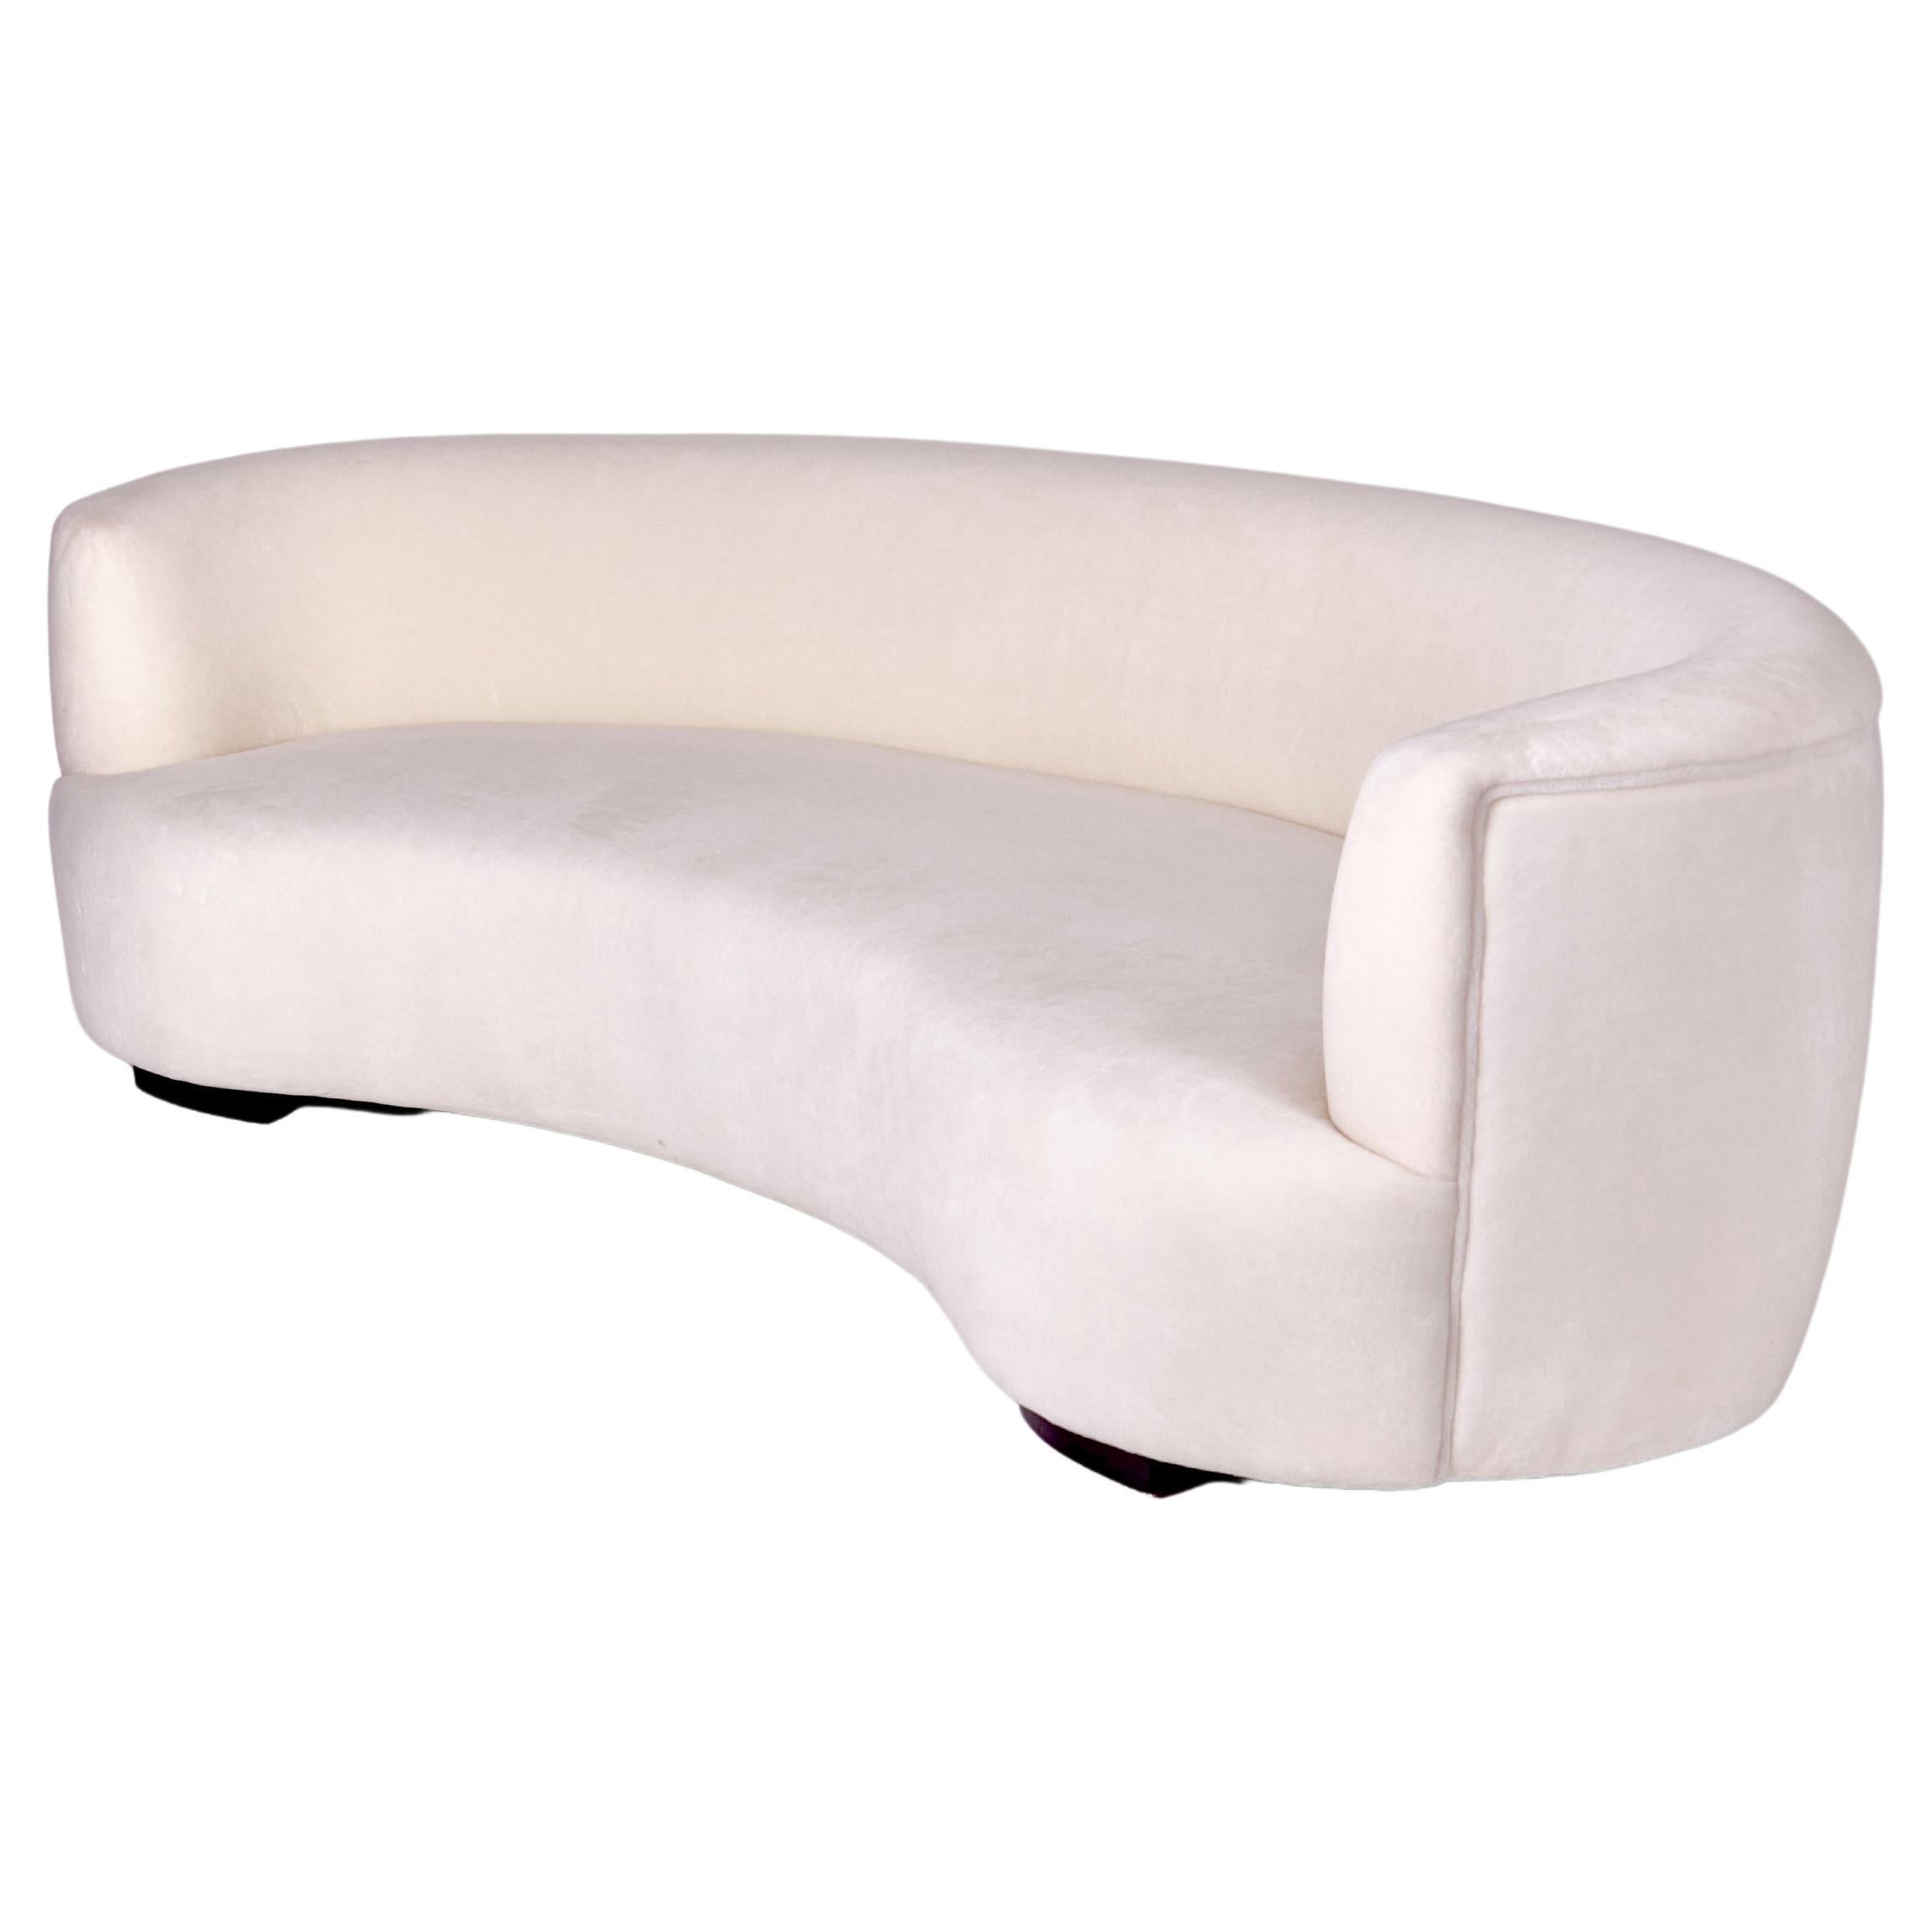 Curved sofa design 1950s